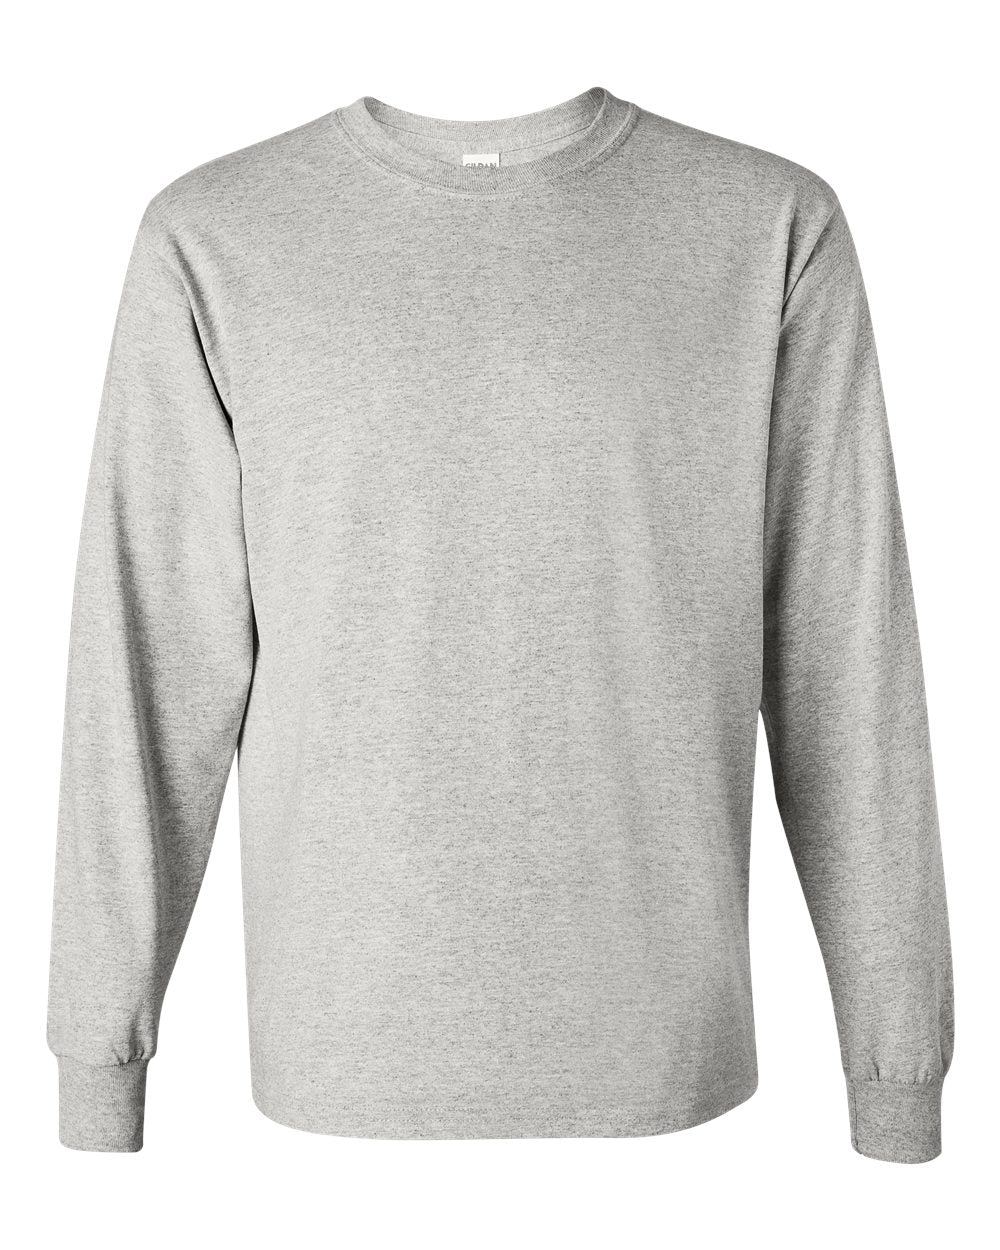 Cedar Mountain Design 11 Long Sleeve Shirt